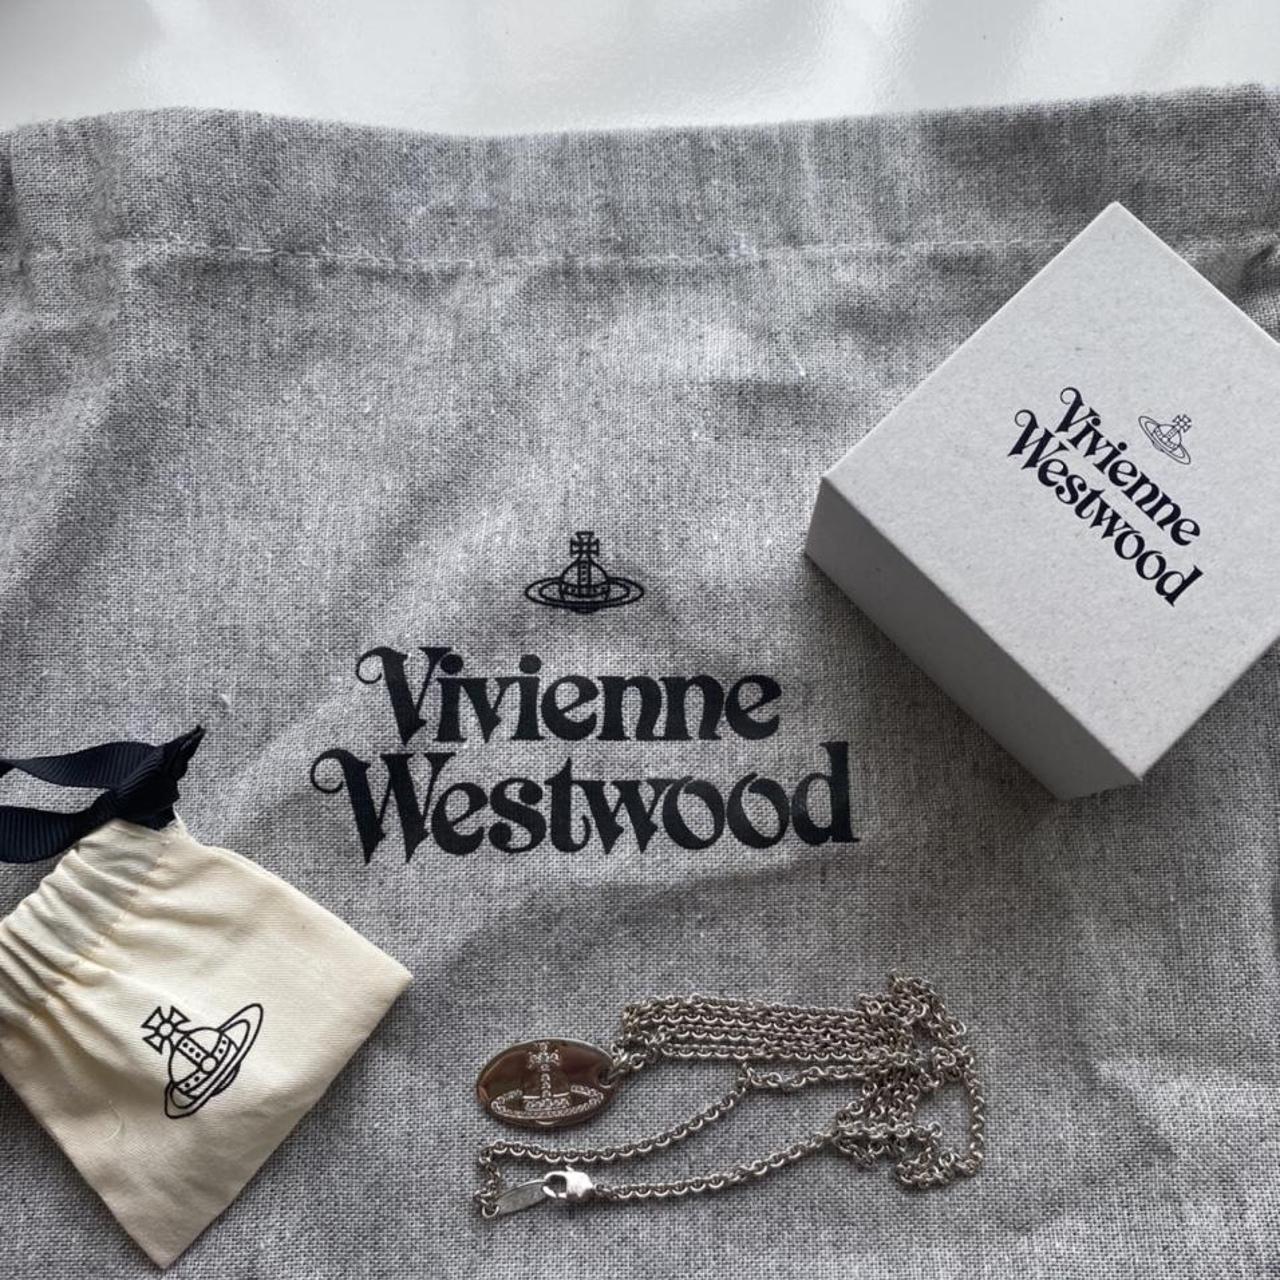 Vivienne Westwood authentic dog tag necklace on... - Depop